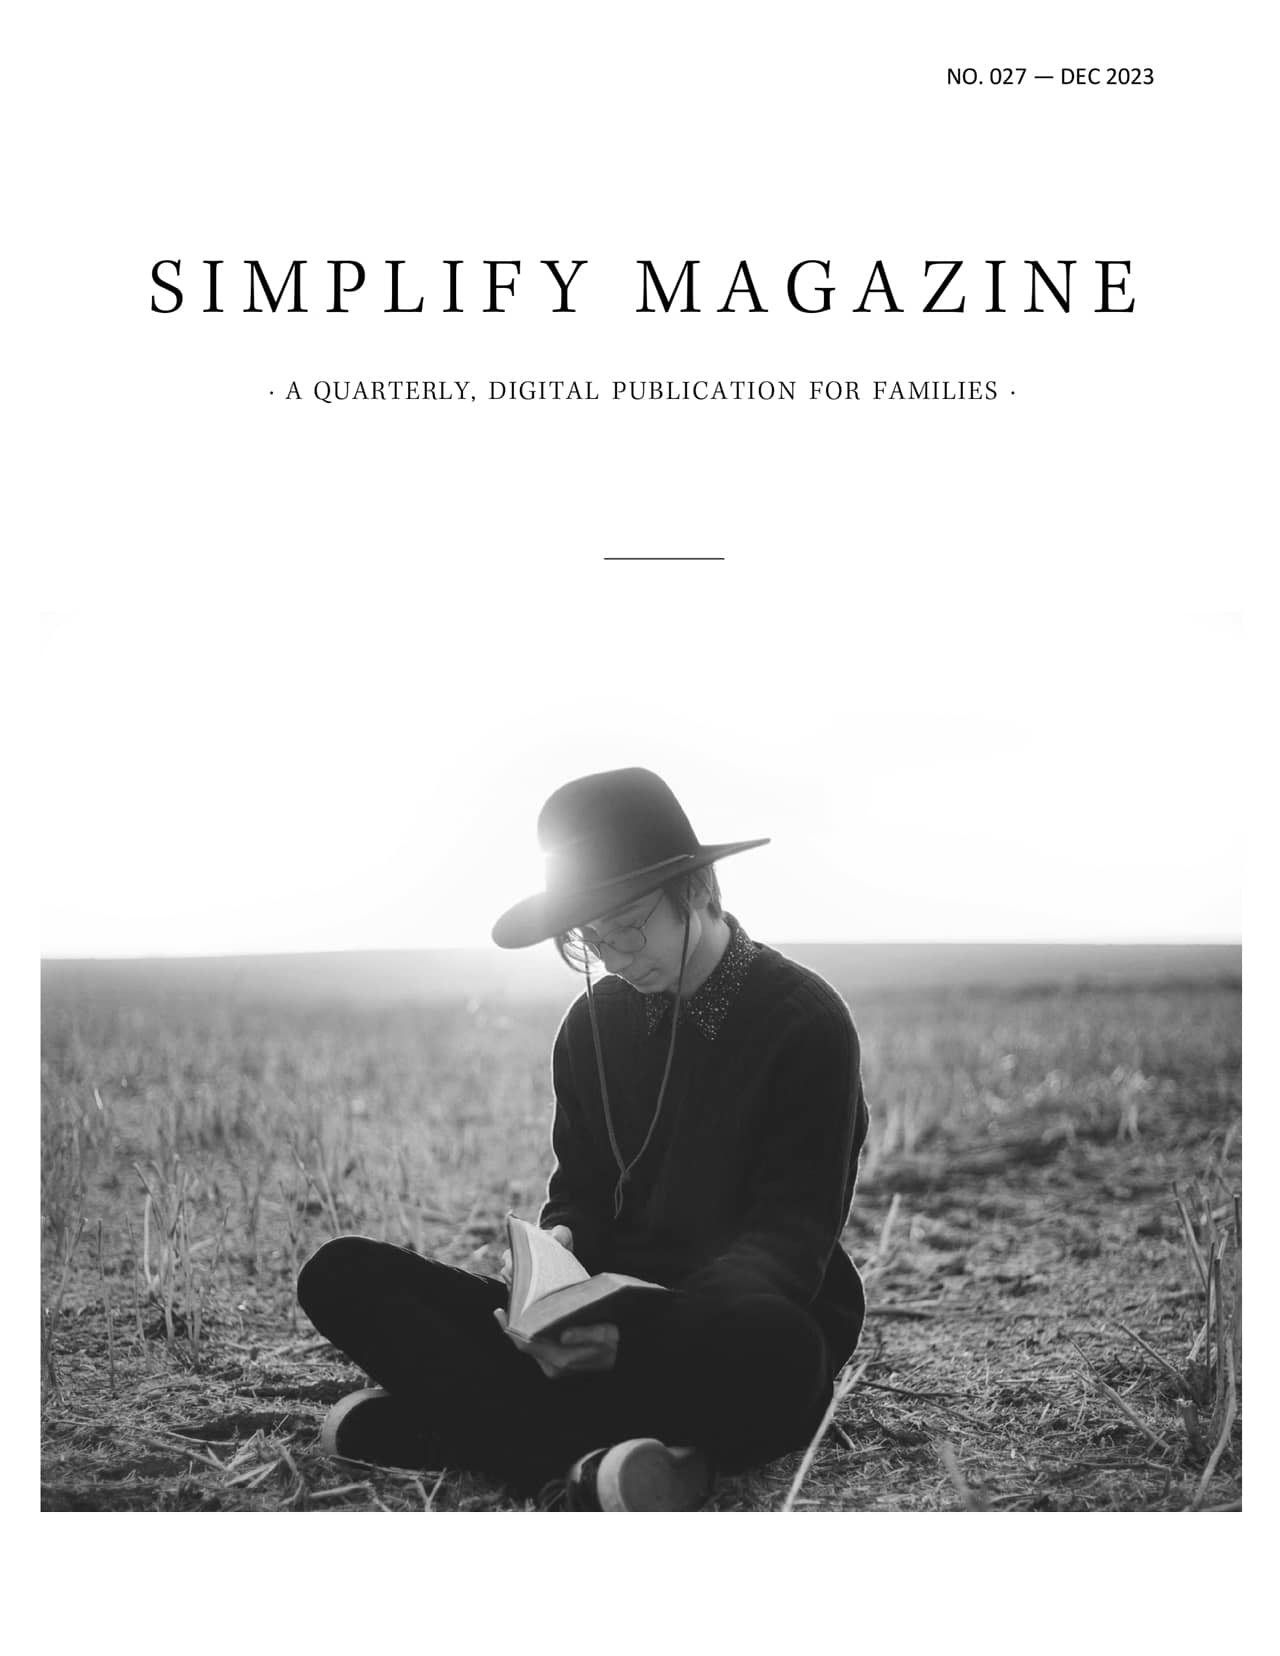 Simplify Magazine Issue #027